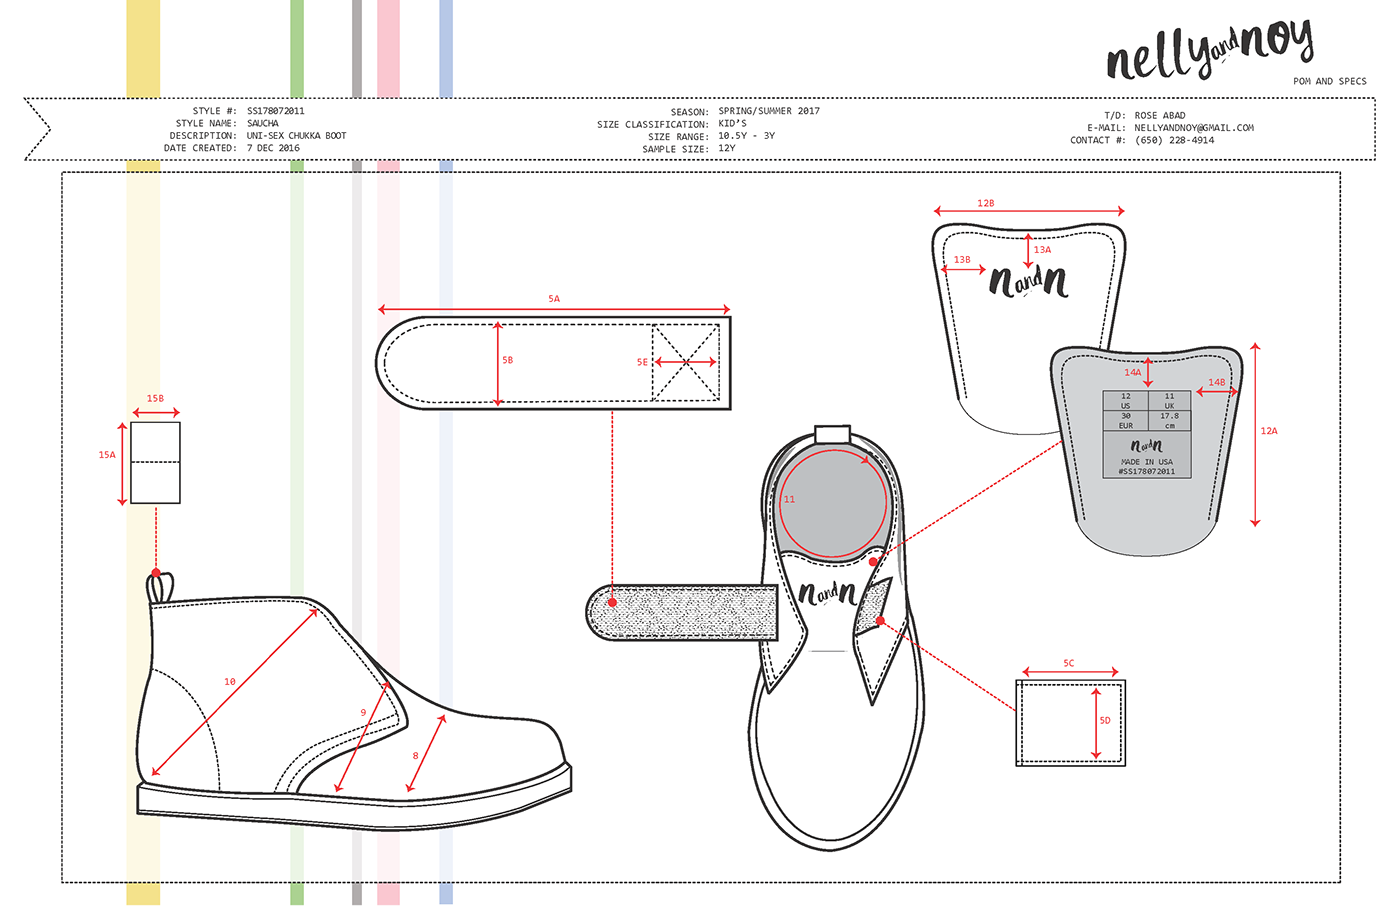 Technical Design Illustrator footwear Sustainability eco-friendly PINATEX product development CAD Design innovation Innovative textiles